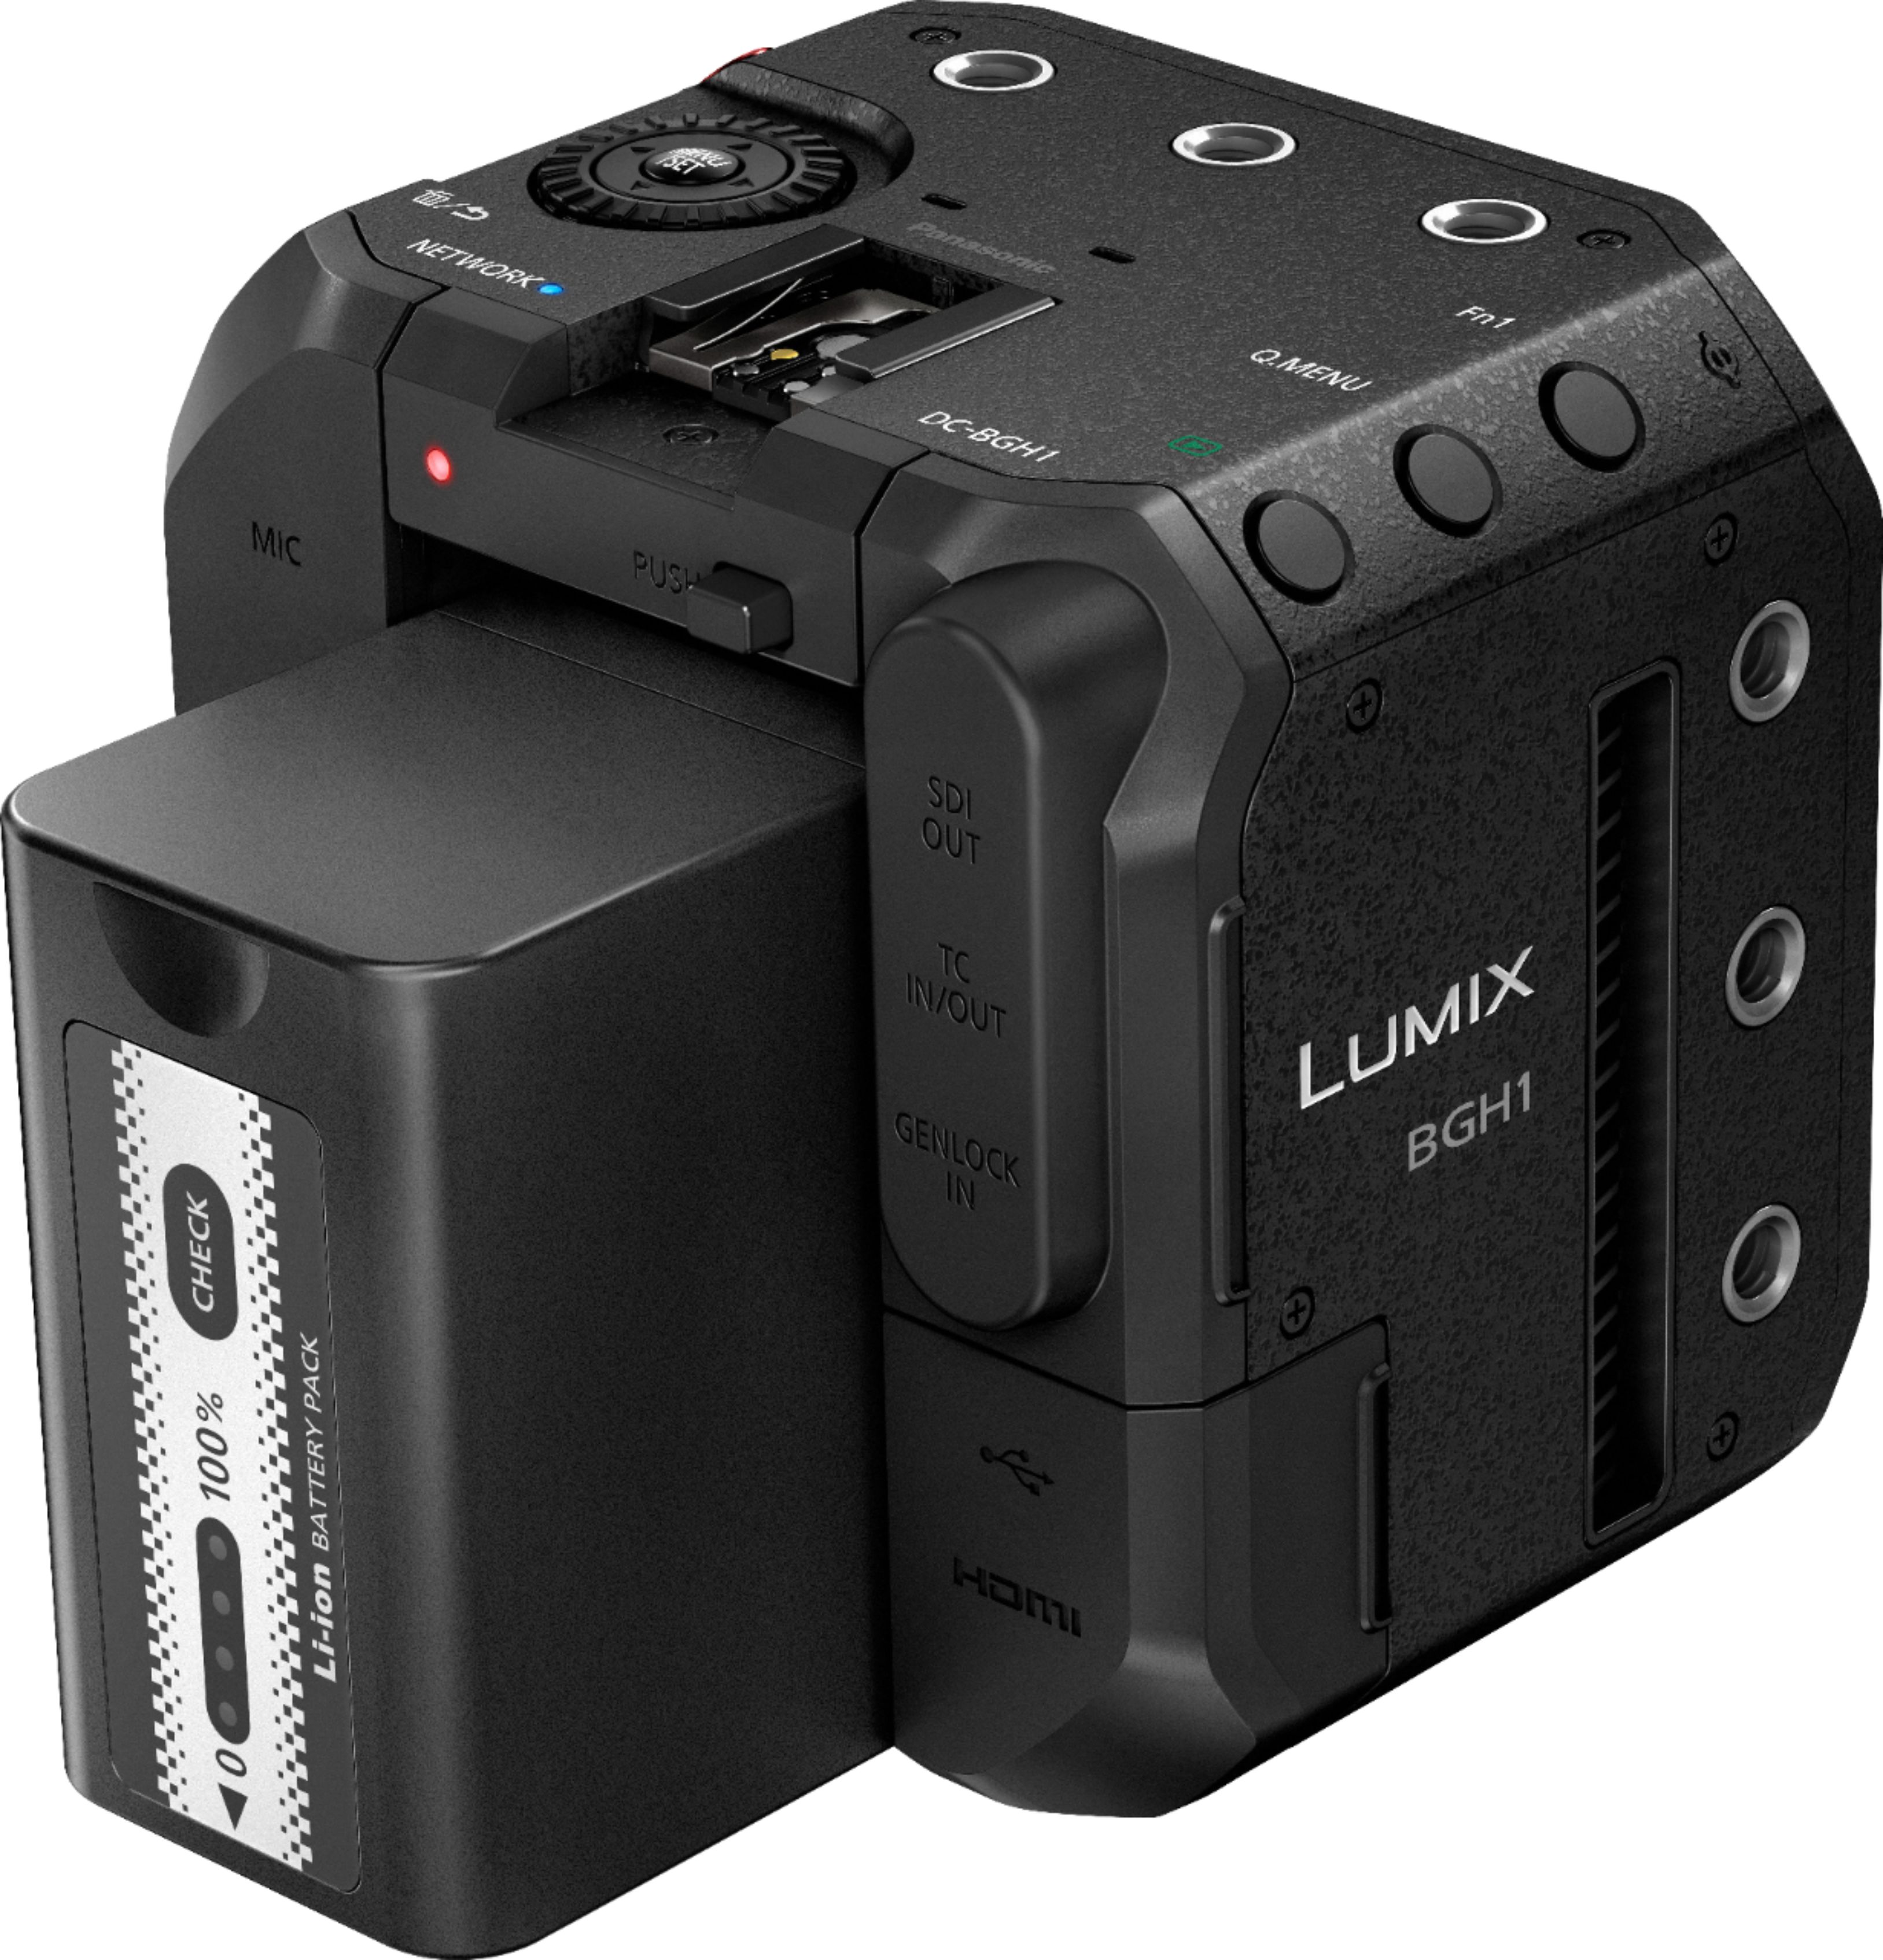 Panasonic LUMIX BGH1 Micro Four Thirds Mirrorless Box Camera DC